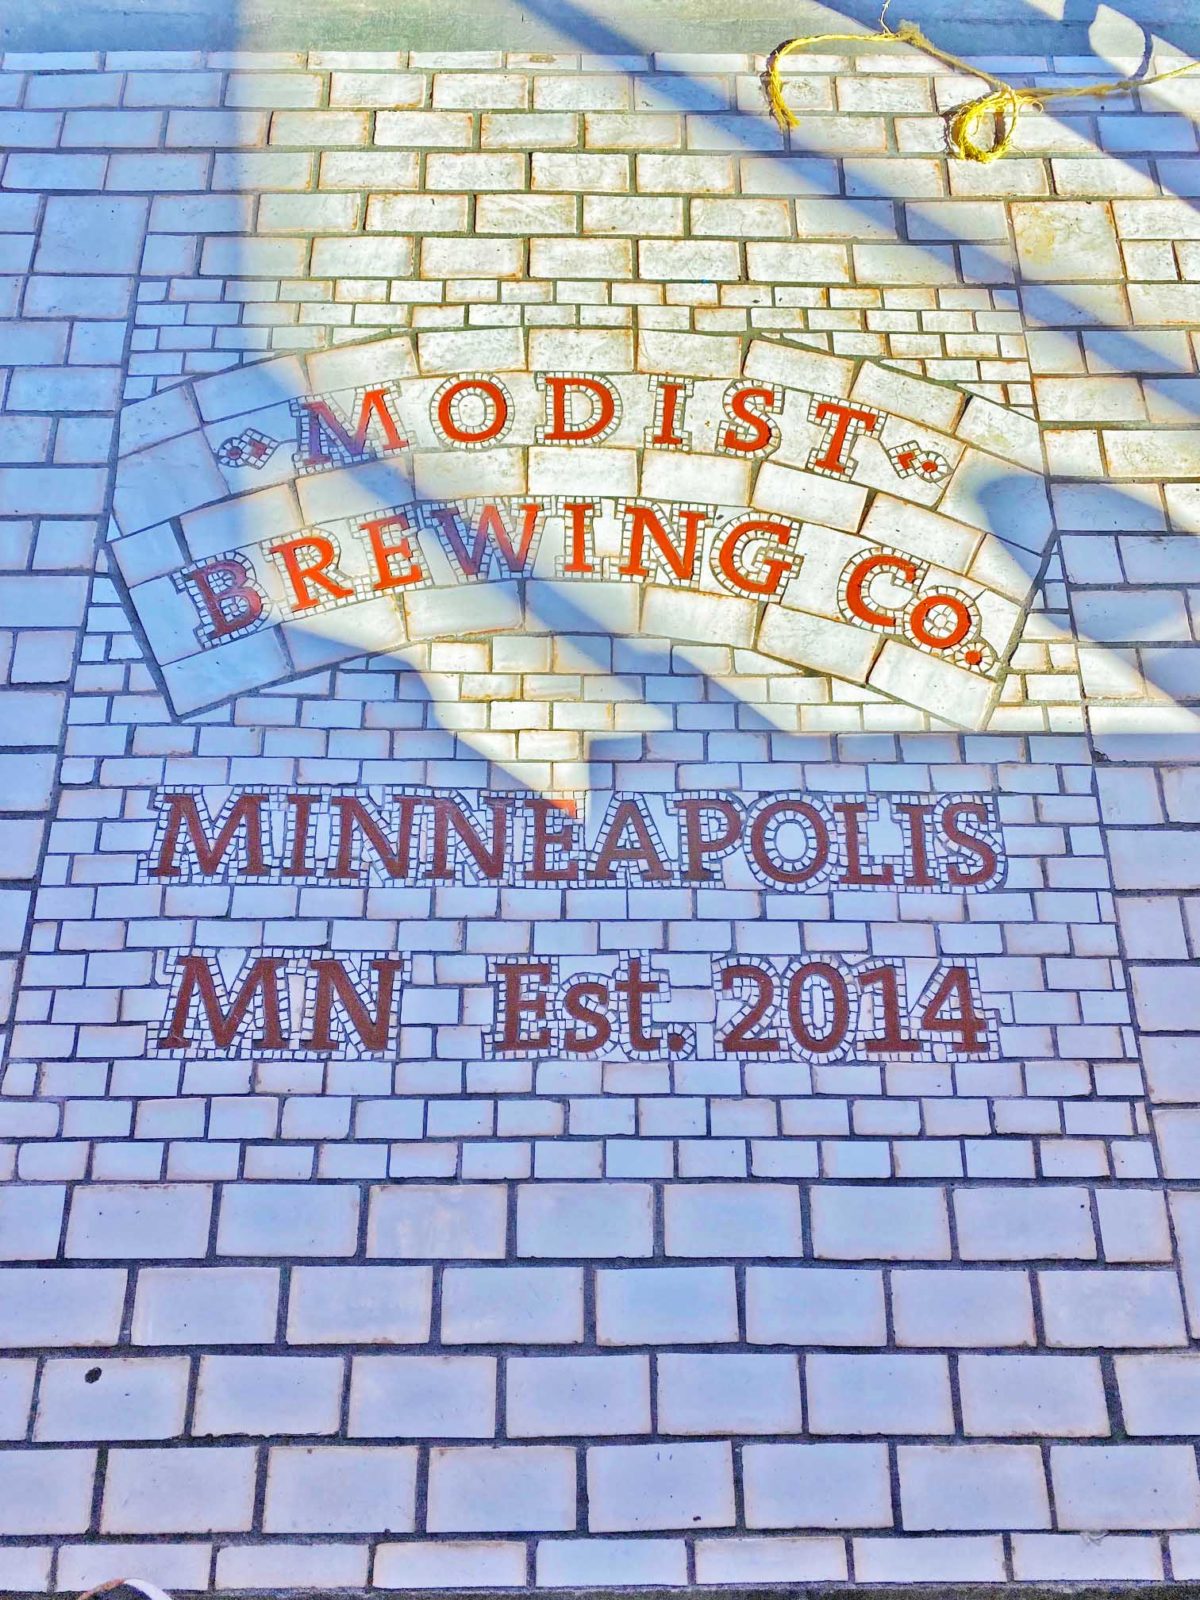 528. Modist Brewing Co, Minneapolis MN, 2022